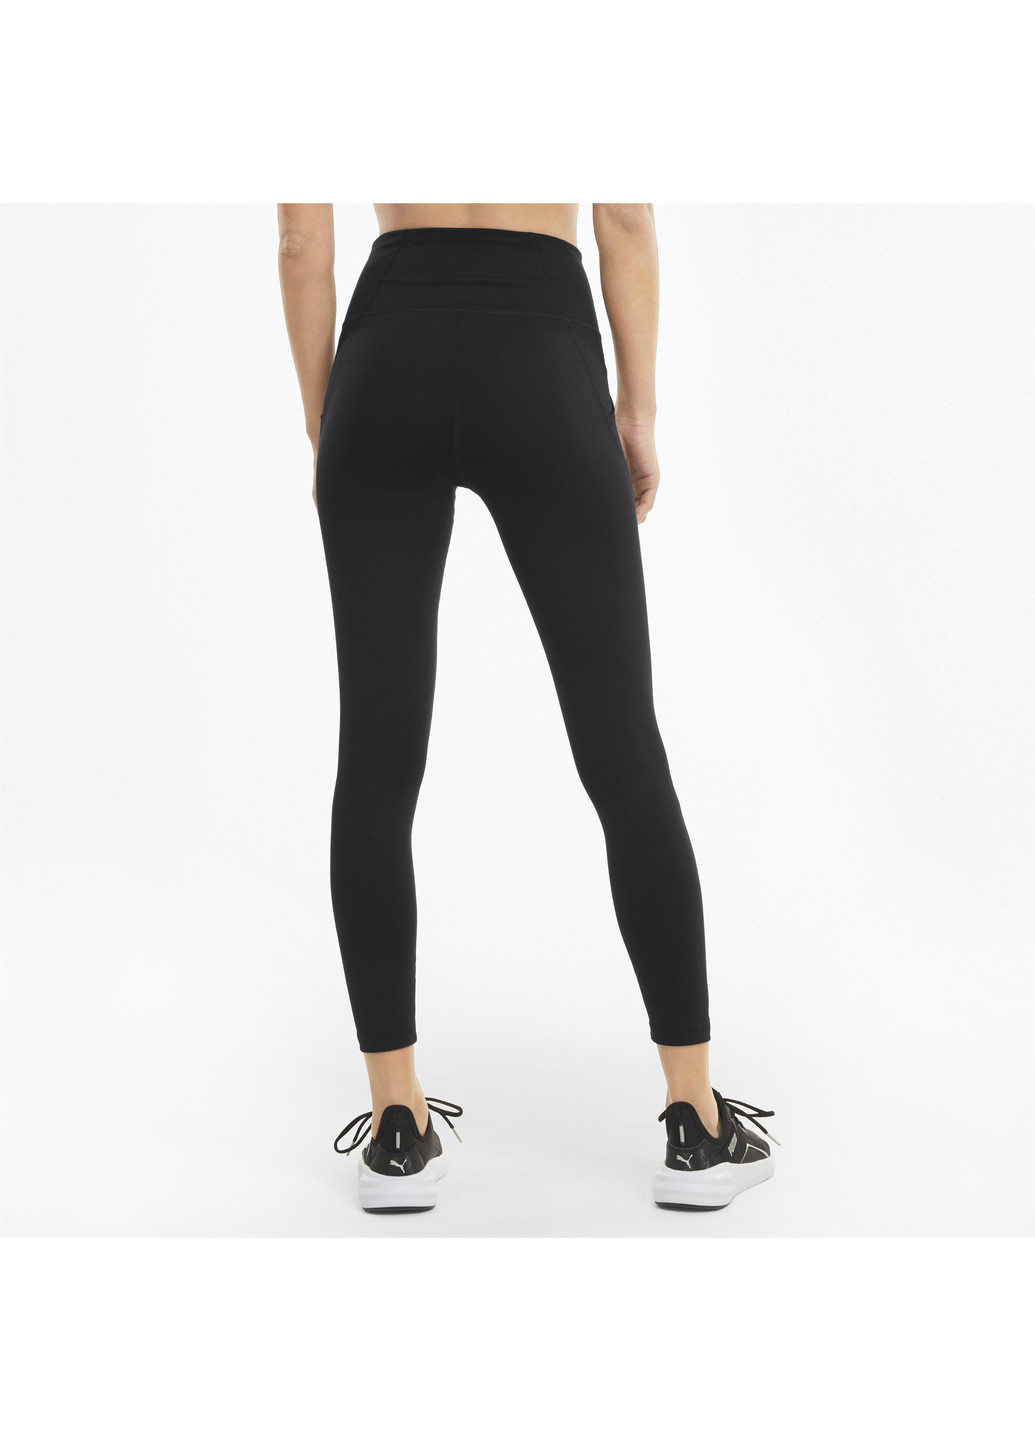 Черные летние леггинсы favourite forever high waist 7/8 women's training leggings Puma